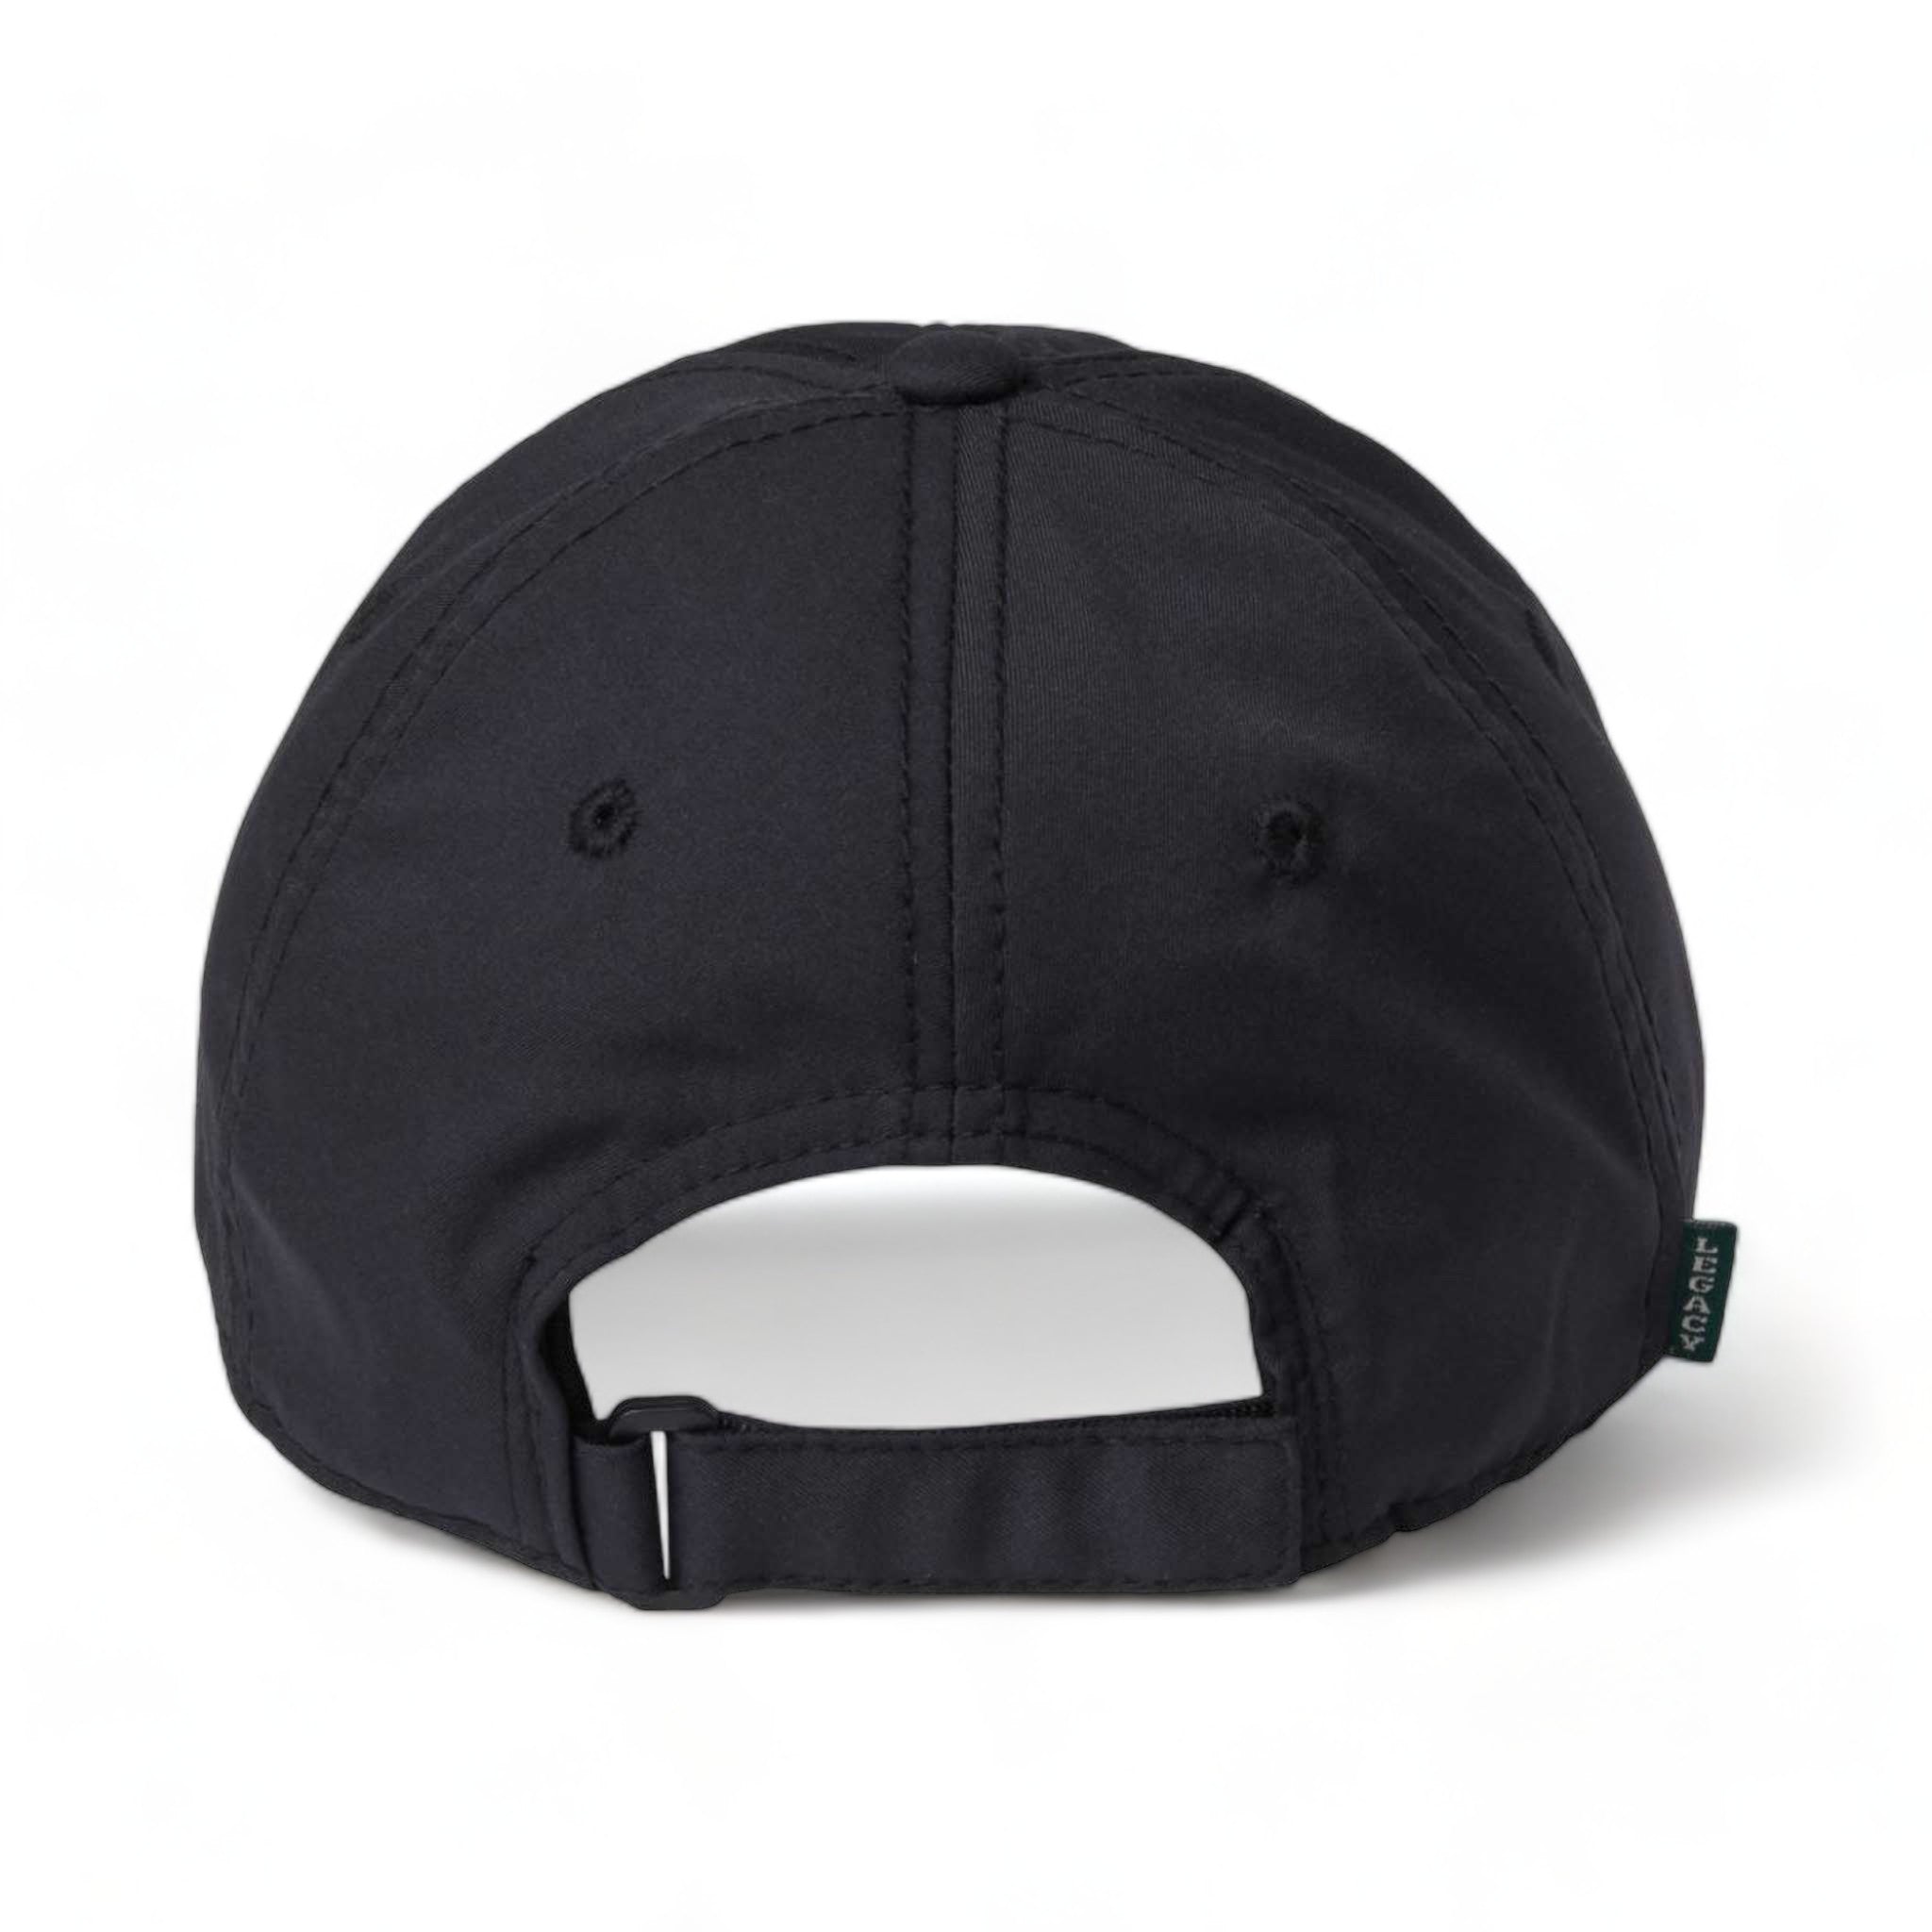 Back view of LEGACY CFA custom hat in black